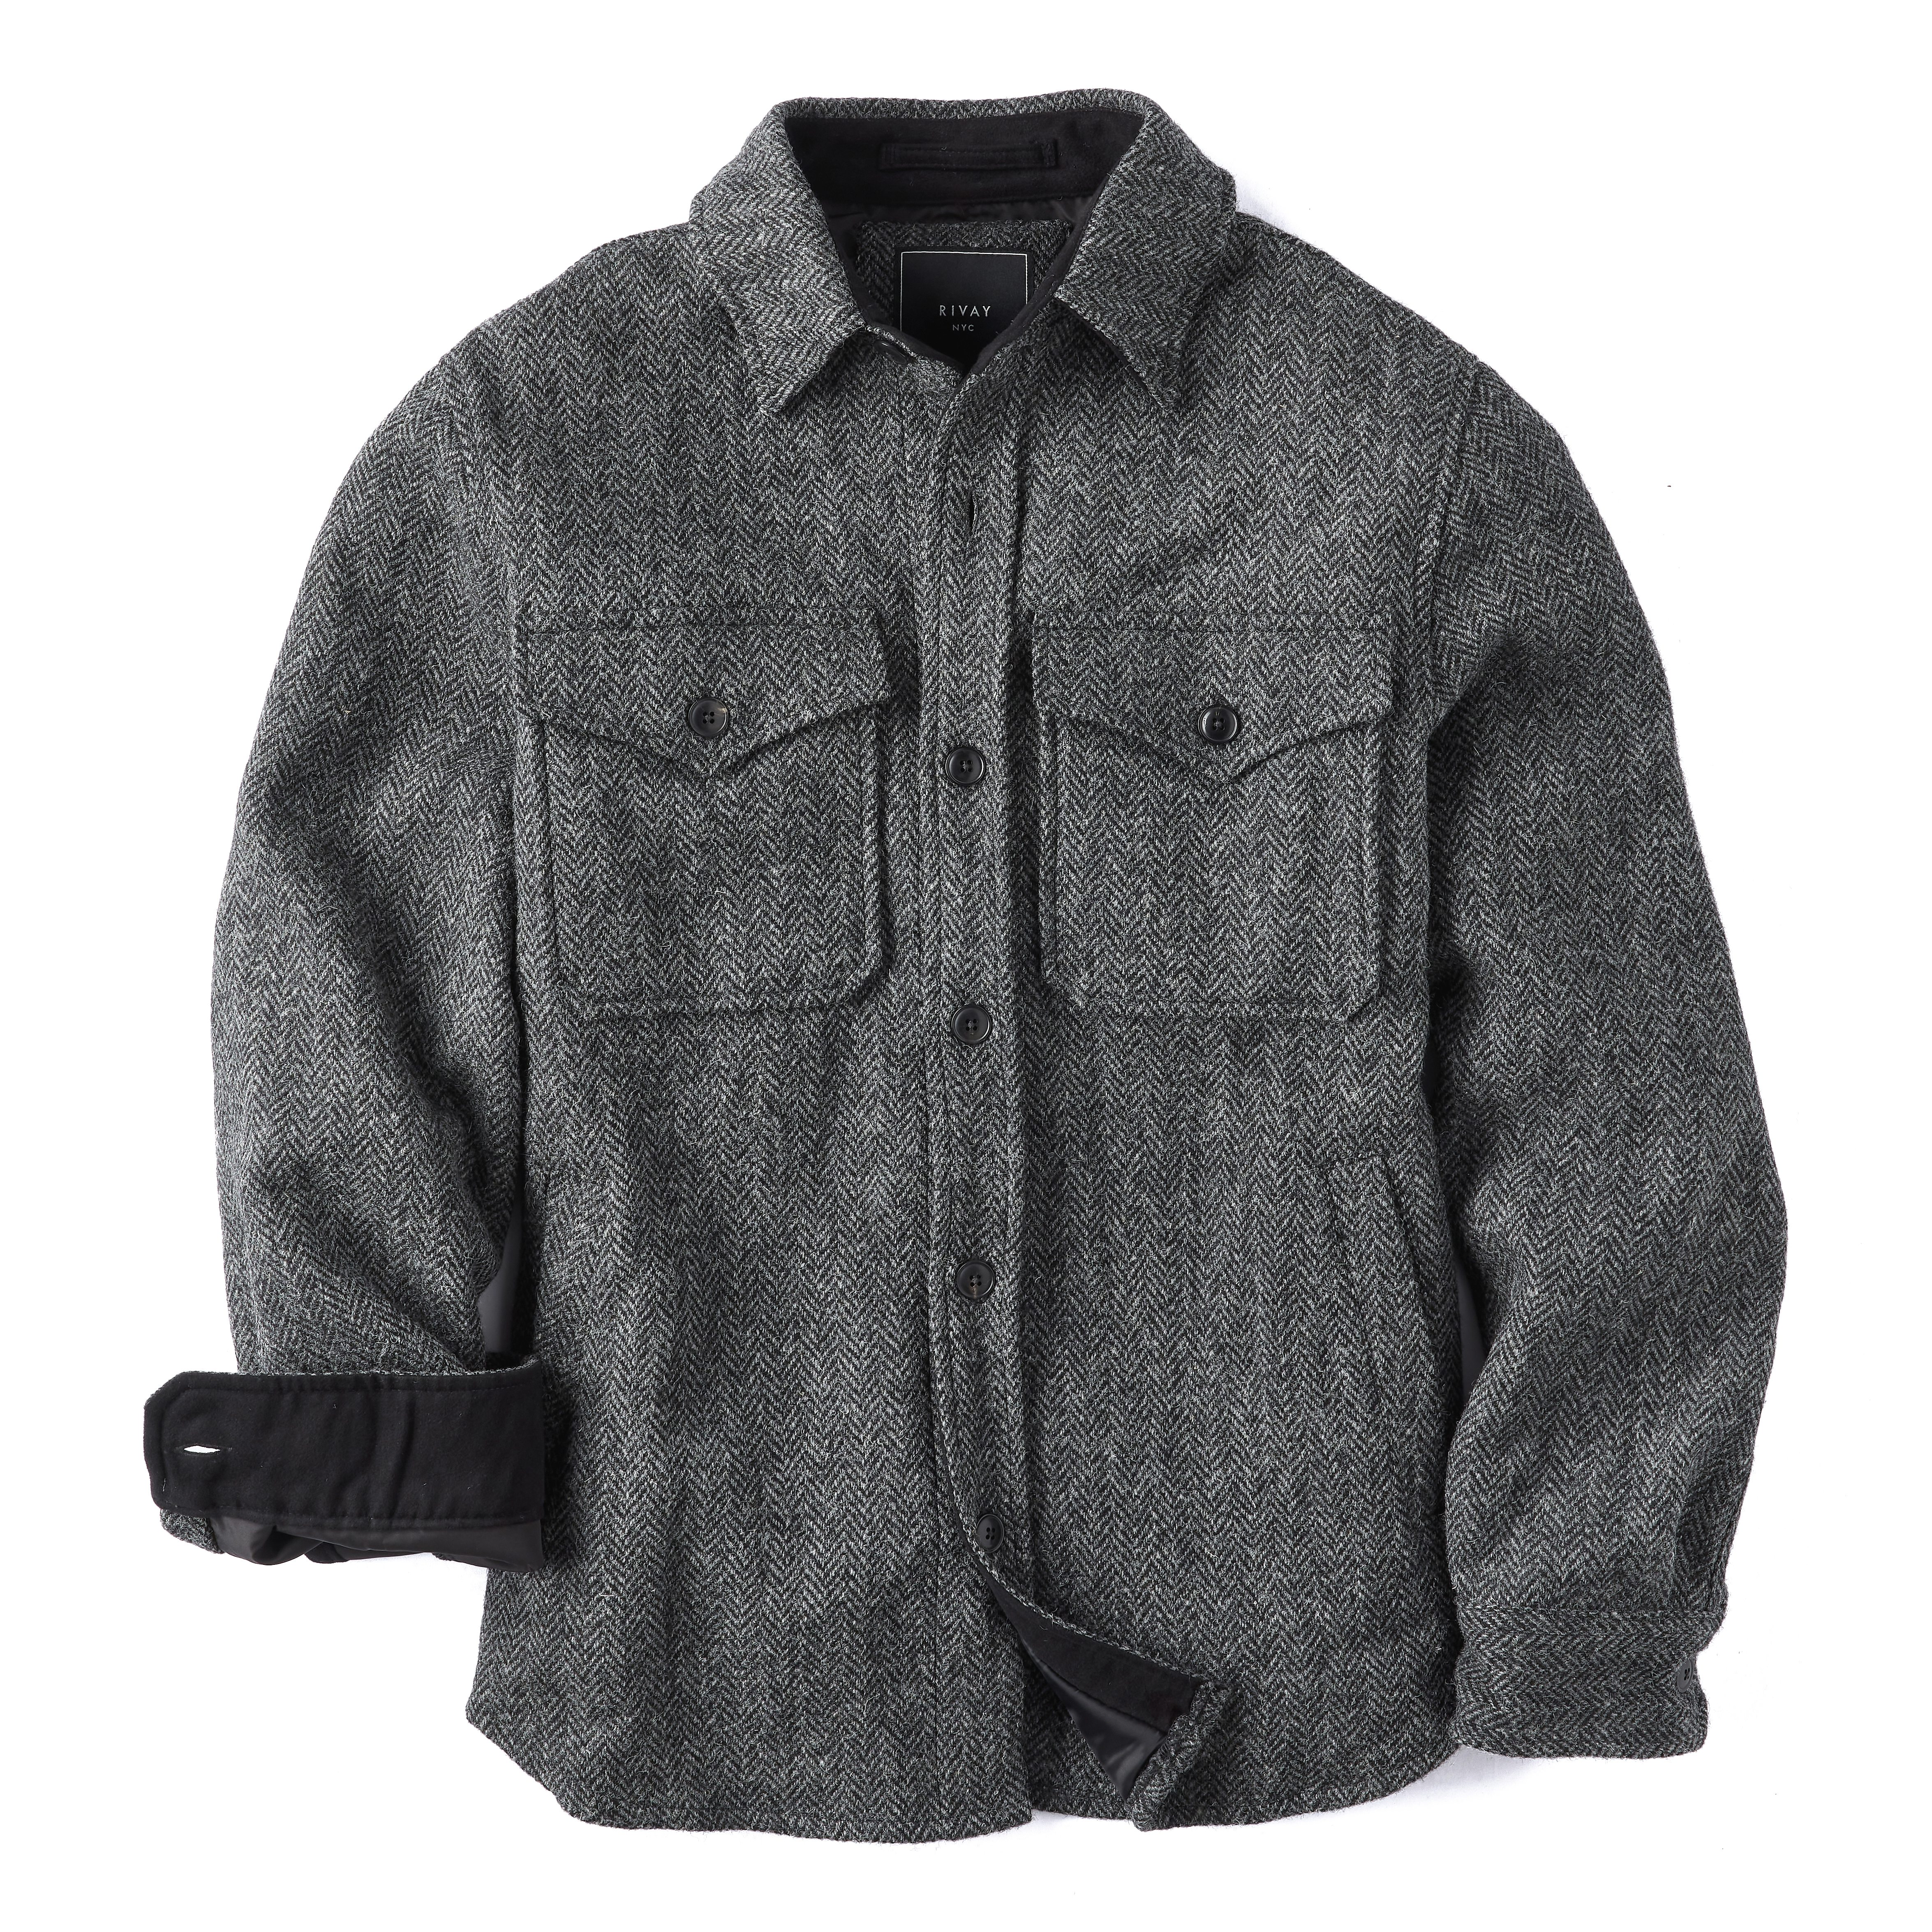 Rivay NYC Harris Tweed Wool CPO Shirt Jacket - Charcoal 